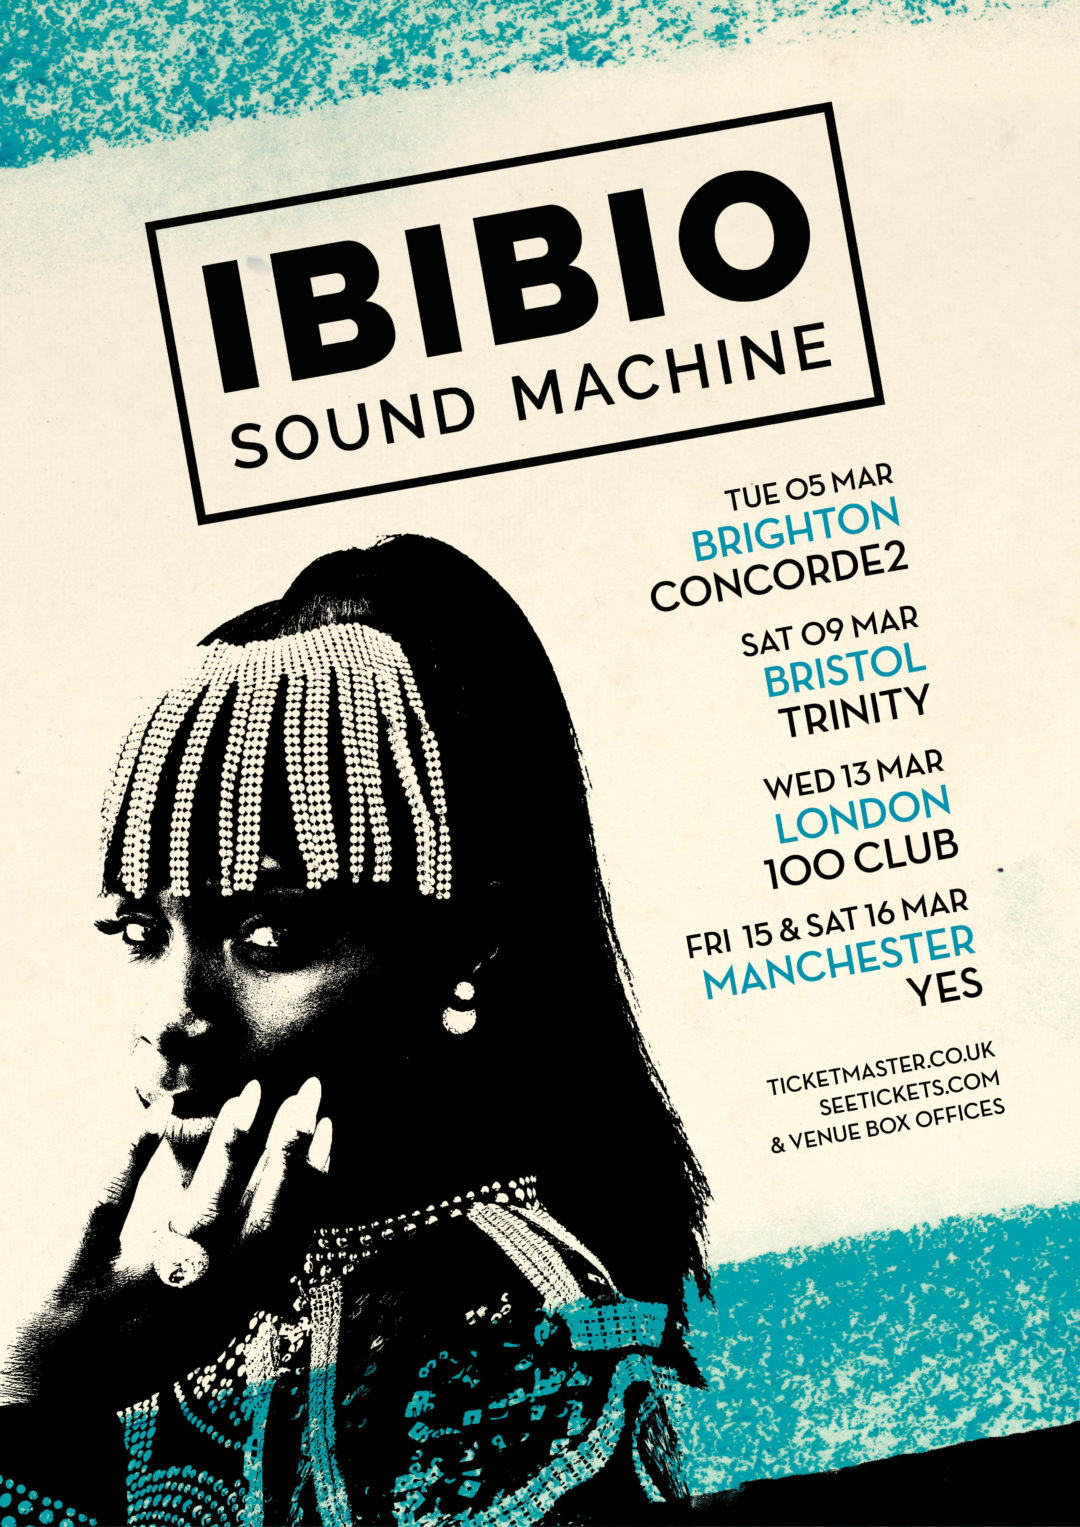 ibibio sound machine tour